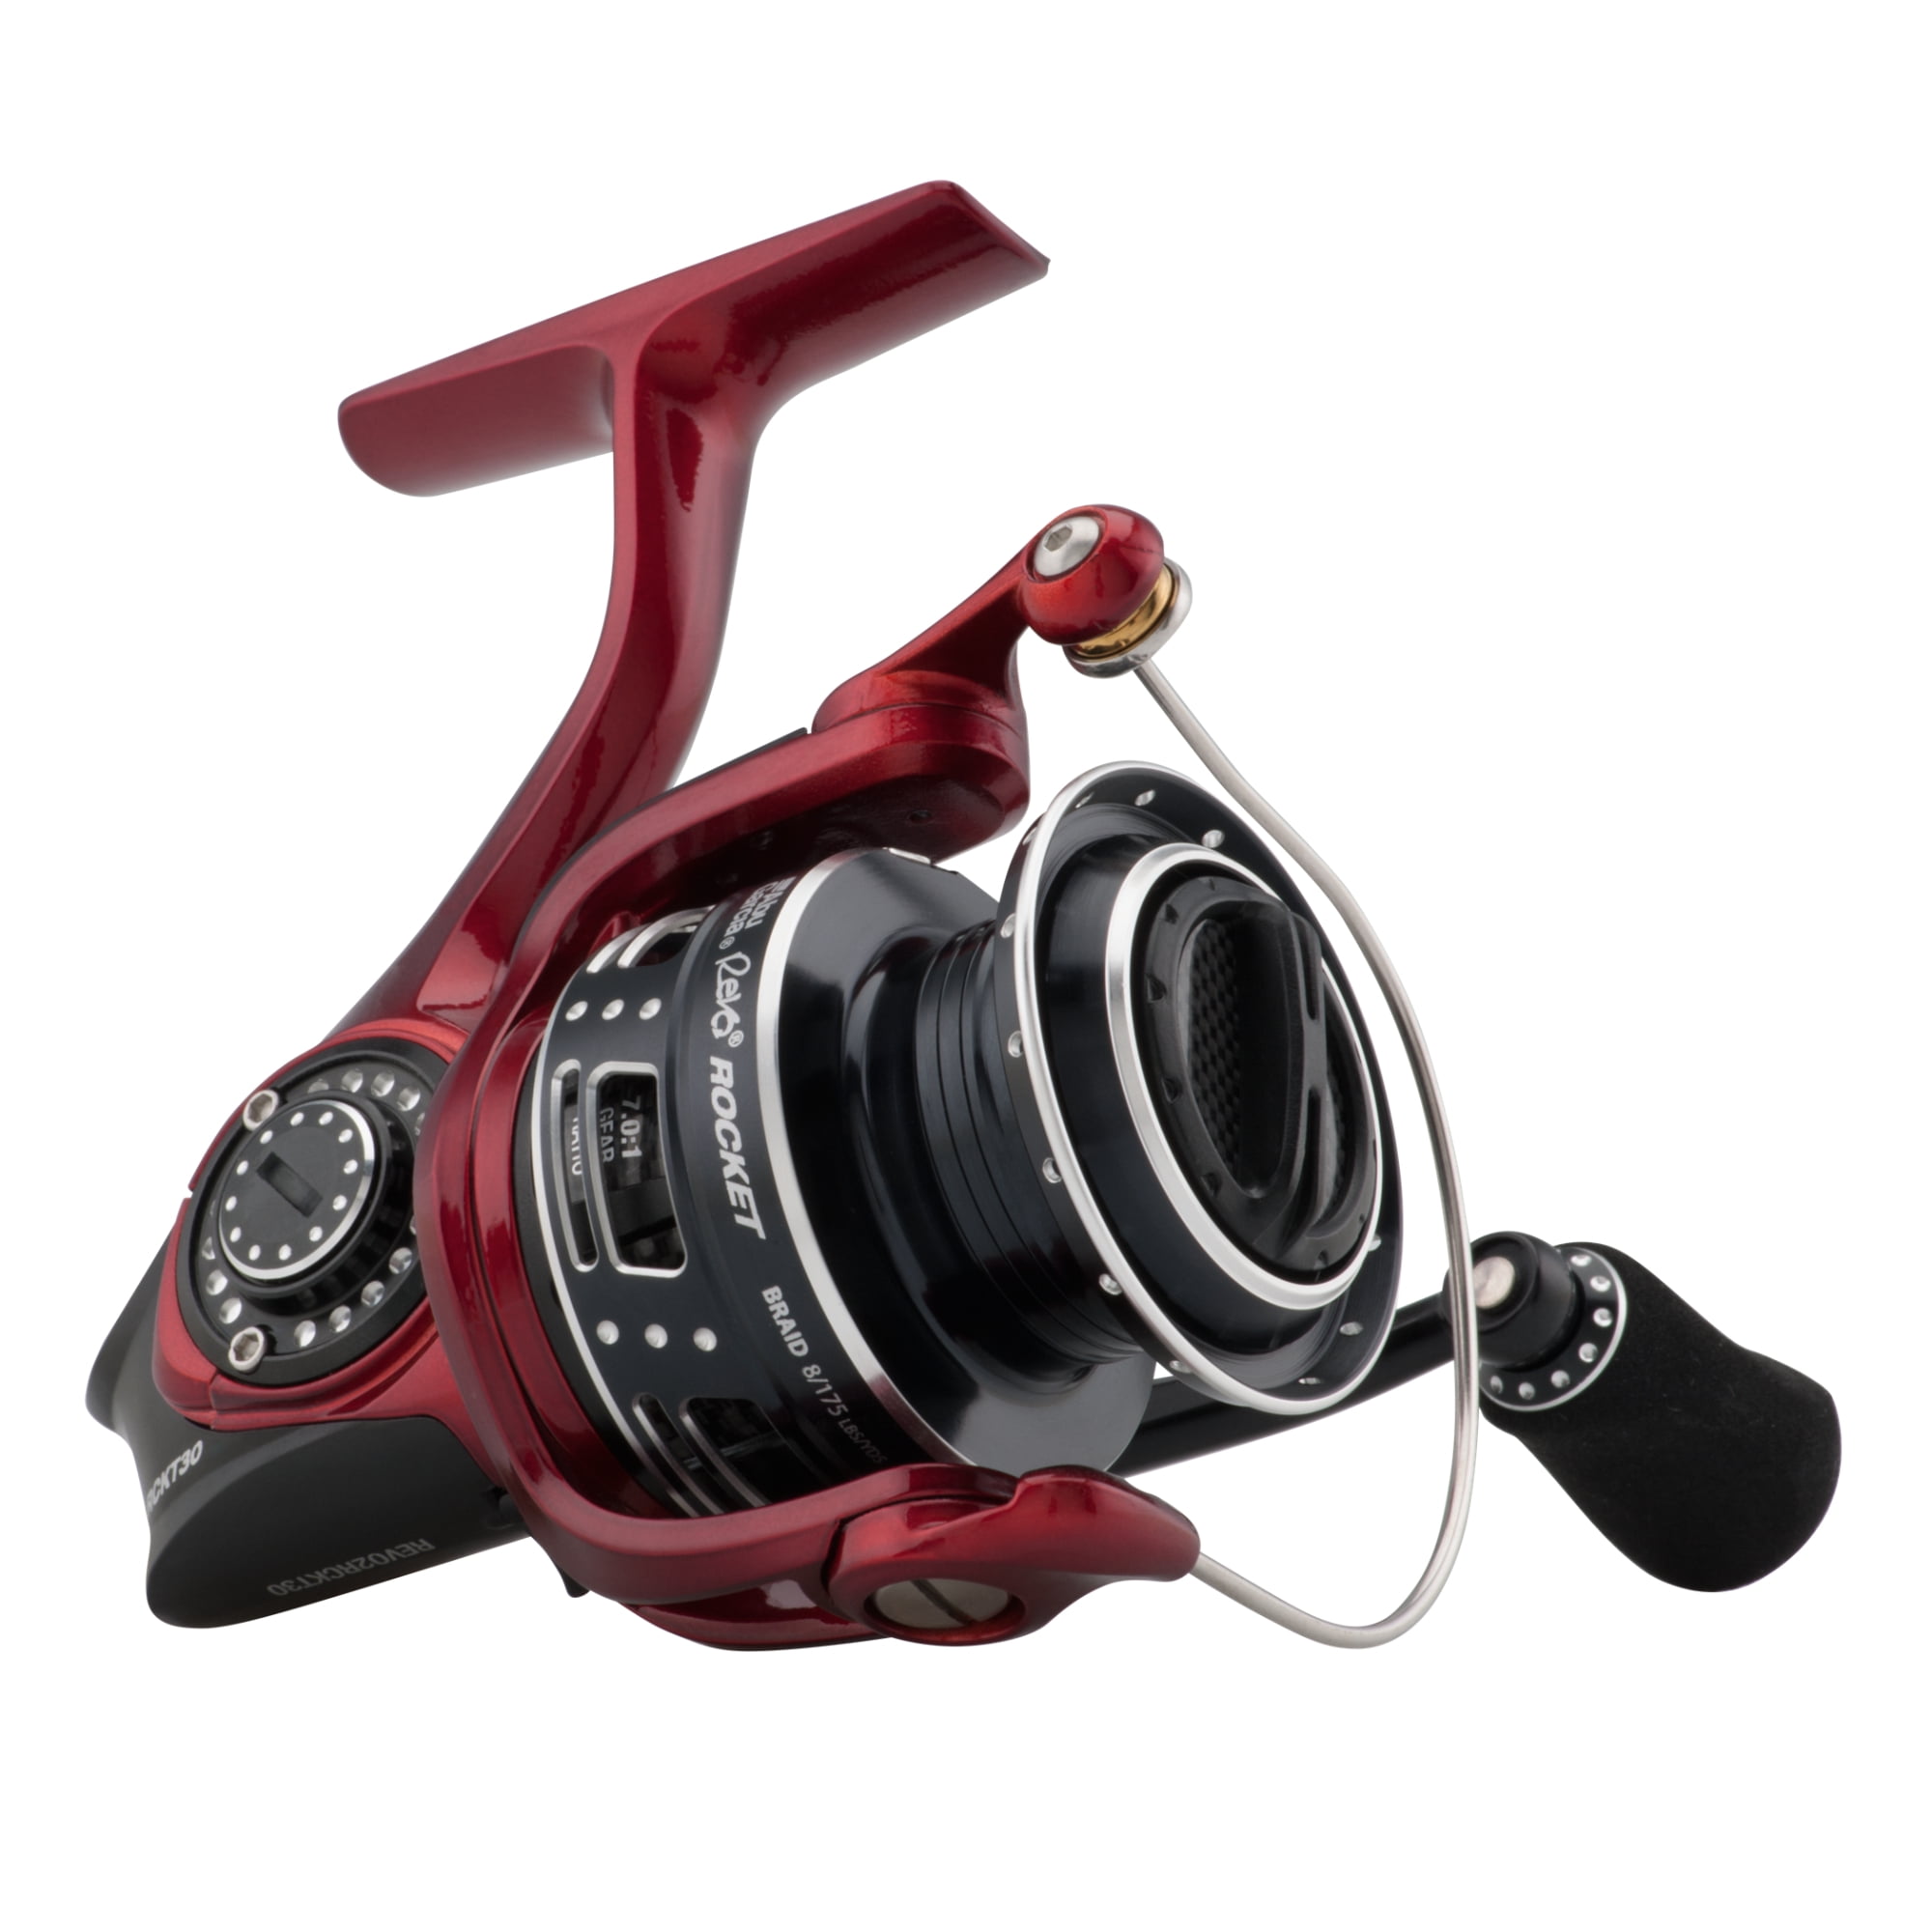 Abu Garcia Revo Rocket Spinning Reel - Fishing Tackle Retailer - The  Business Magazine of the Sportfishing Industry